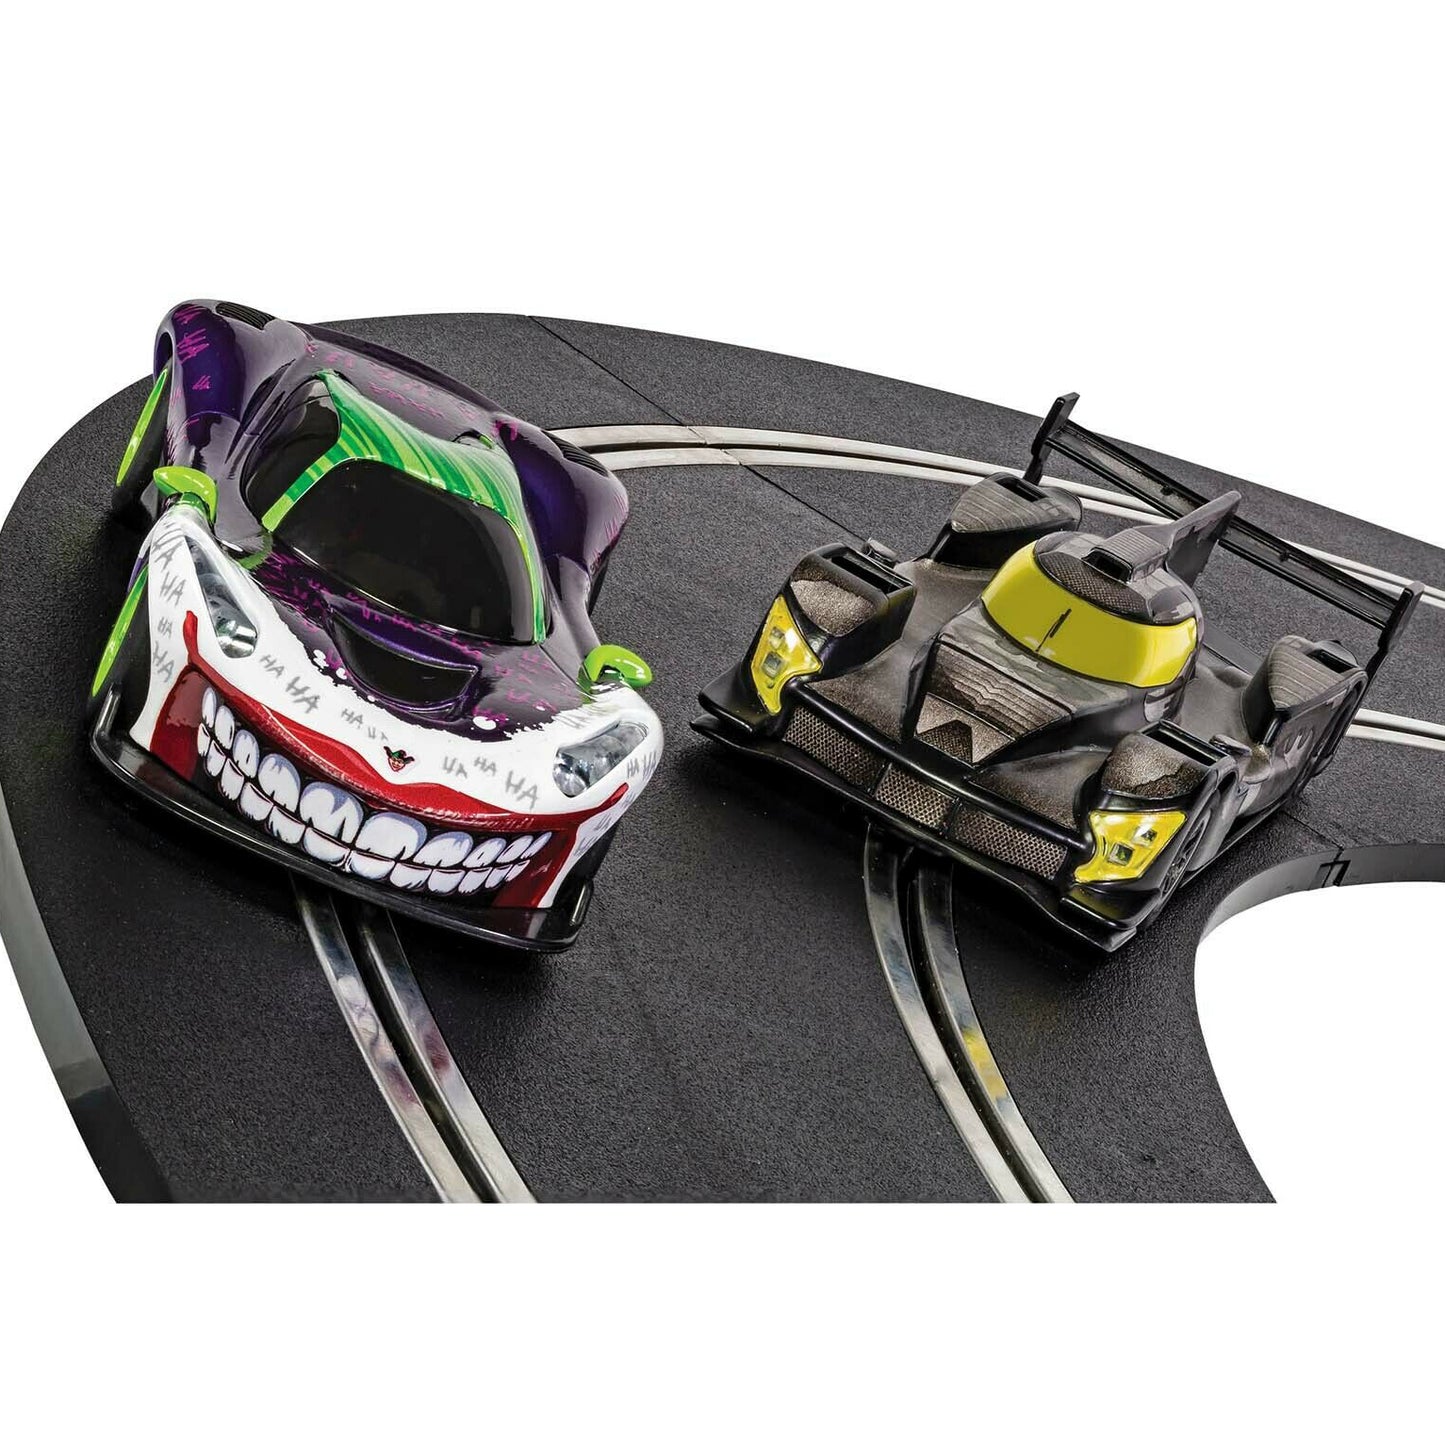 Scalextric 1:32 Figure-Of-Eight Layout Set ARC Pro + Batman & Joker Cars